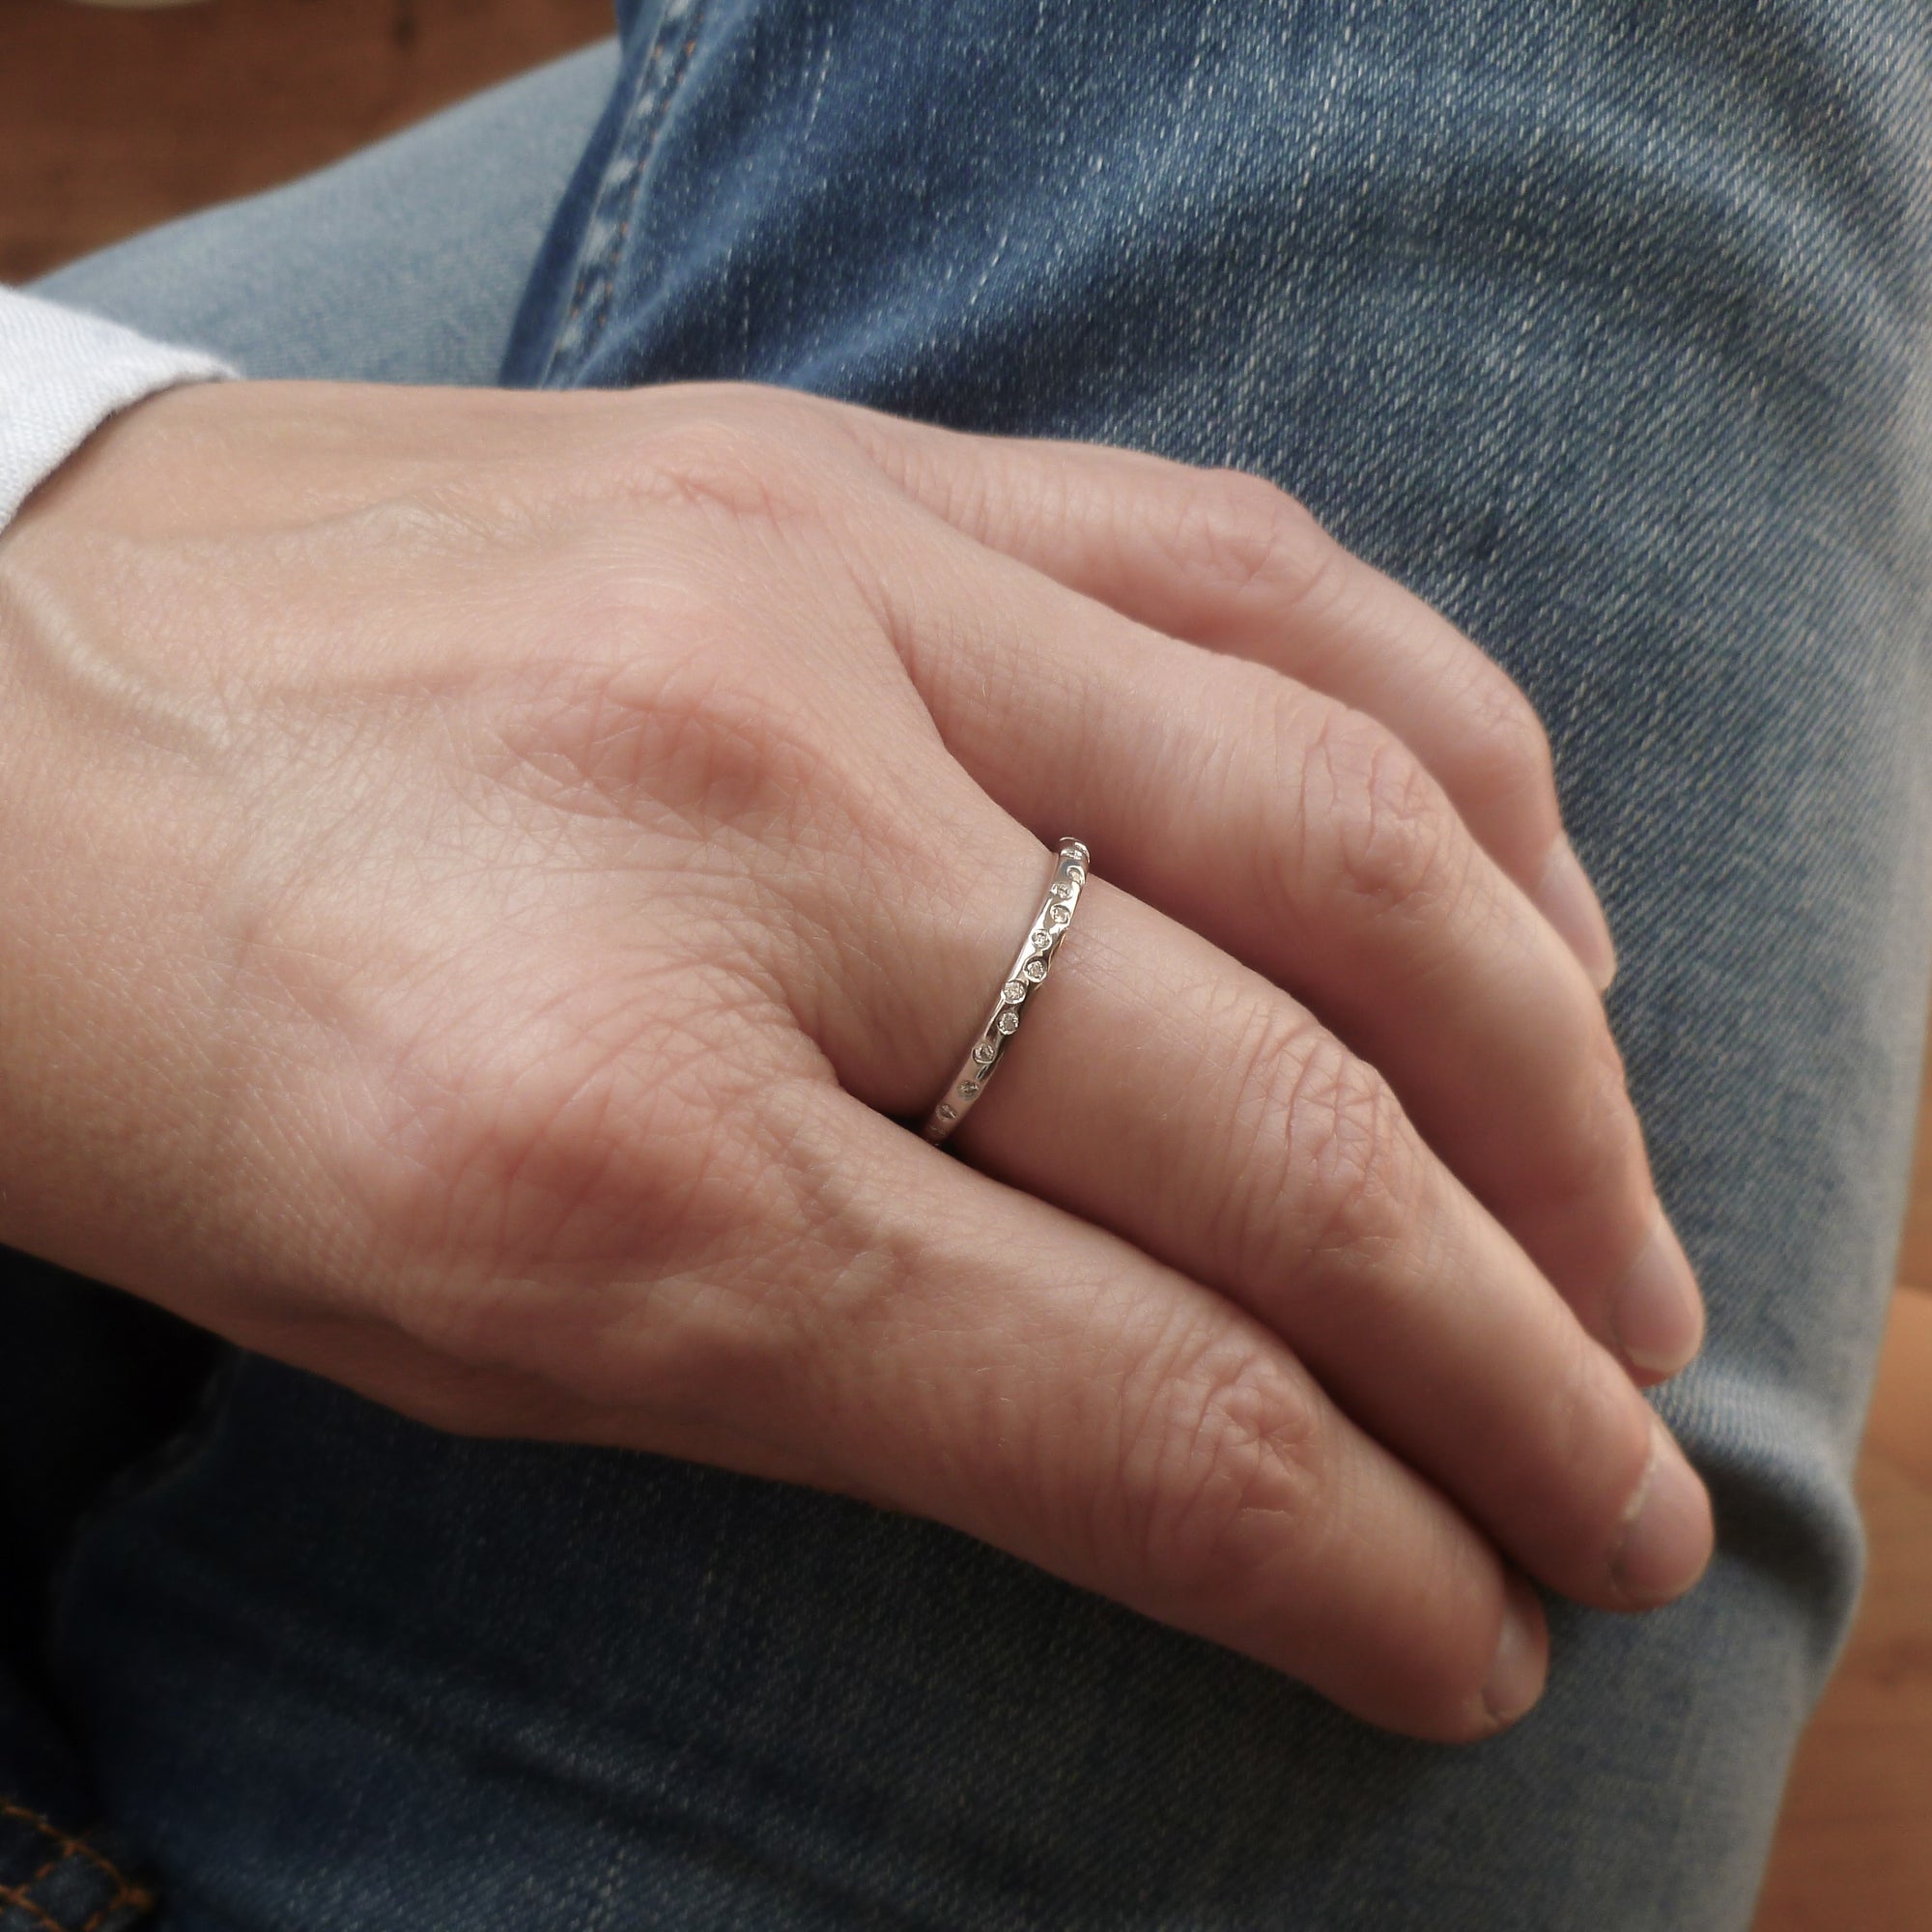 Platinum and diamond engagement, wedding or eternity ring